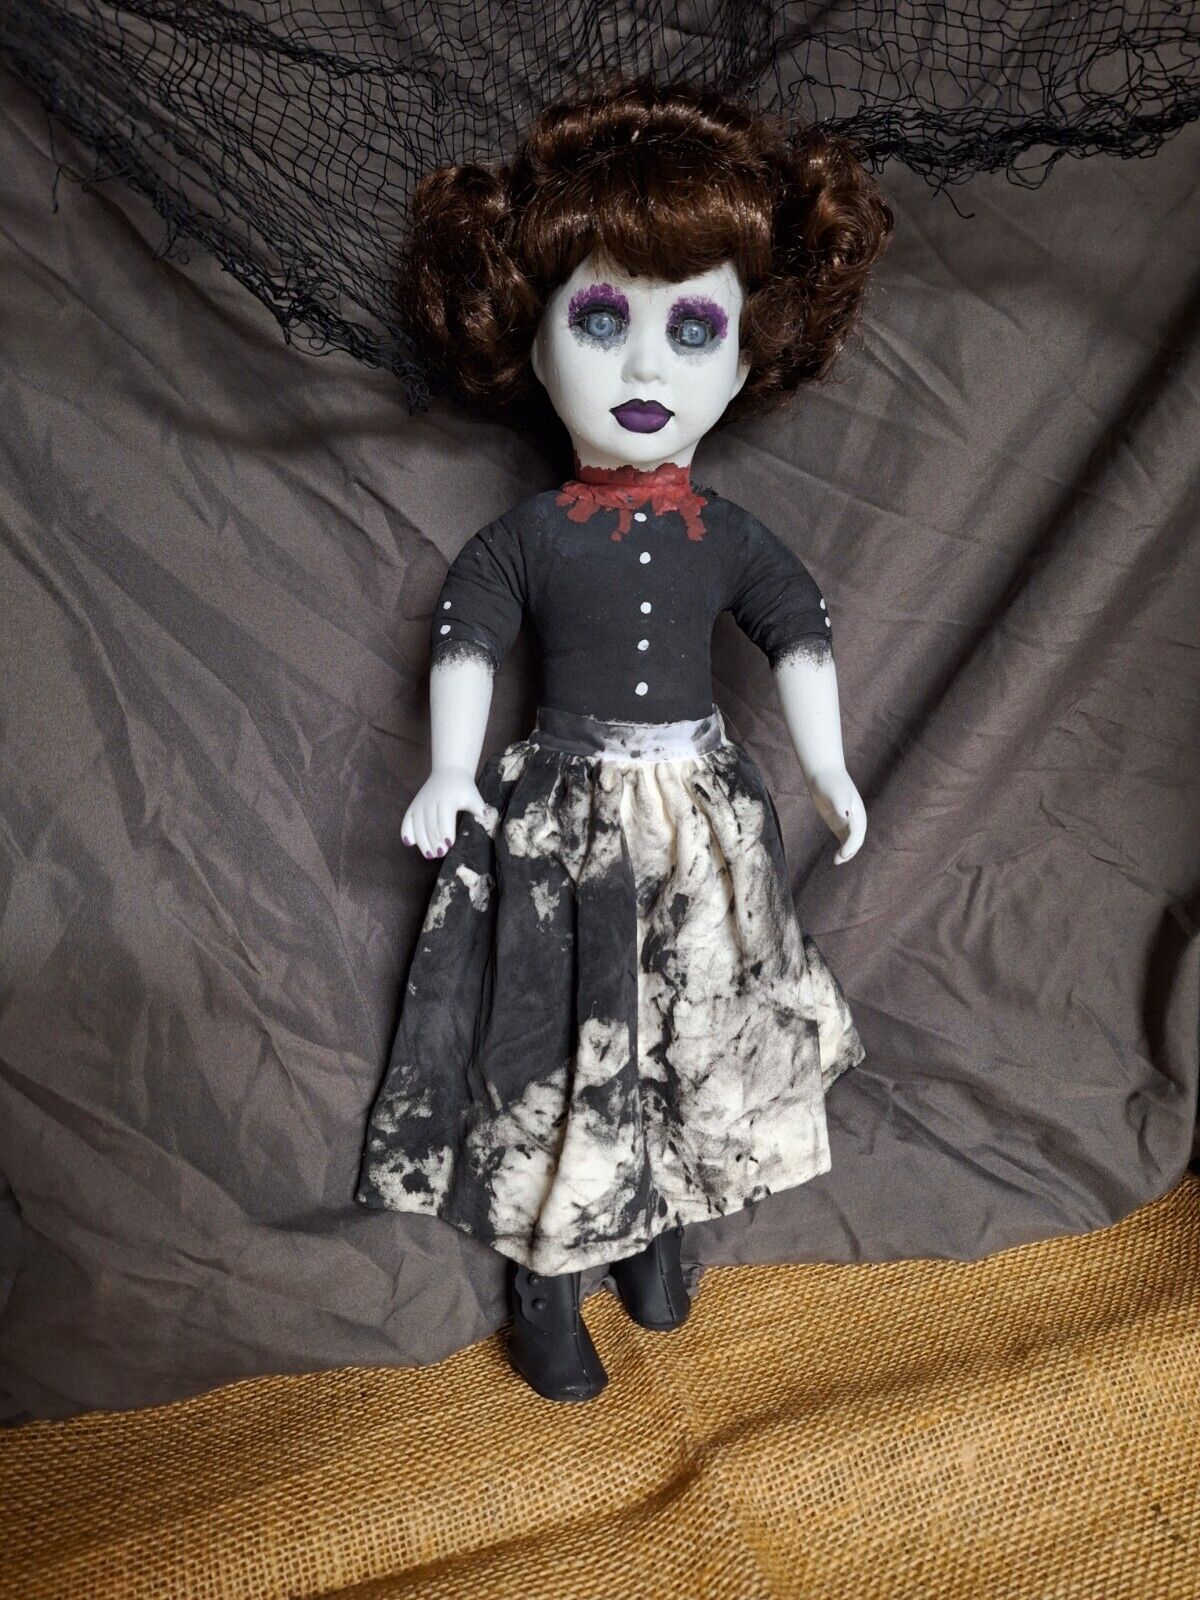 OOAK Gothic Doll, Handmade, 14 In Tall, Halloween Prop